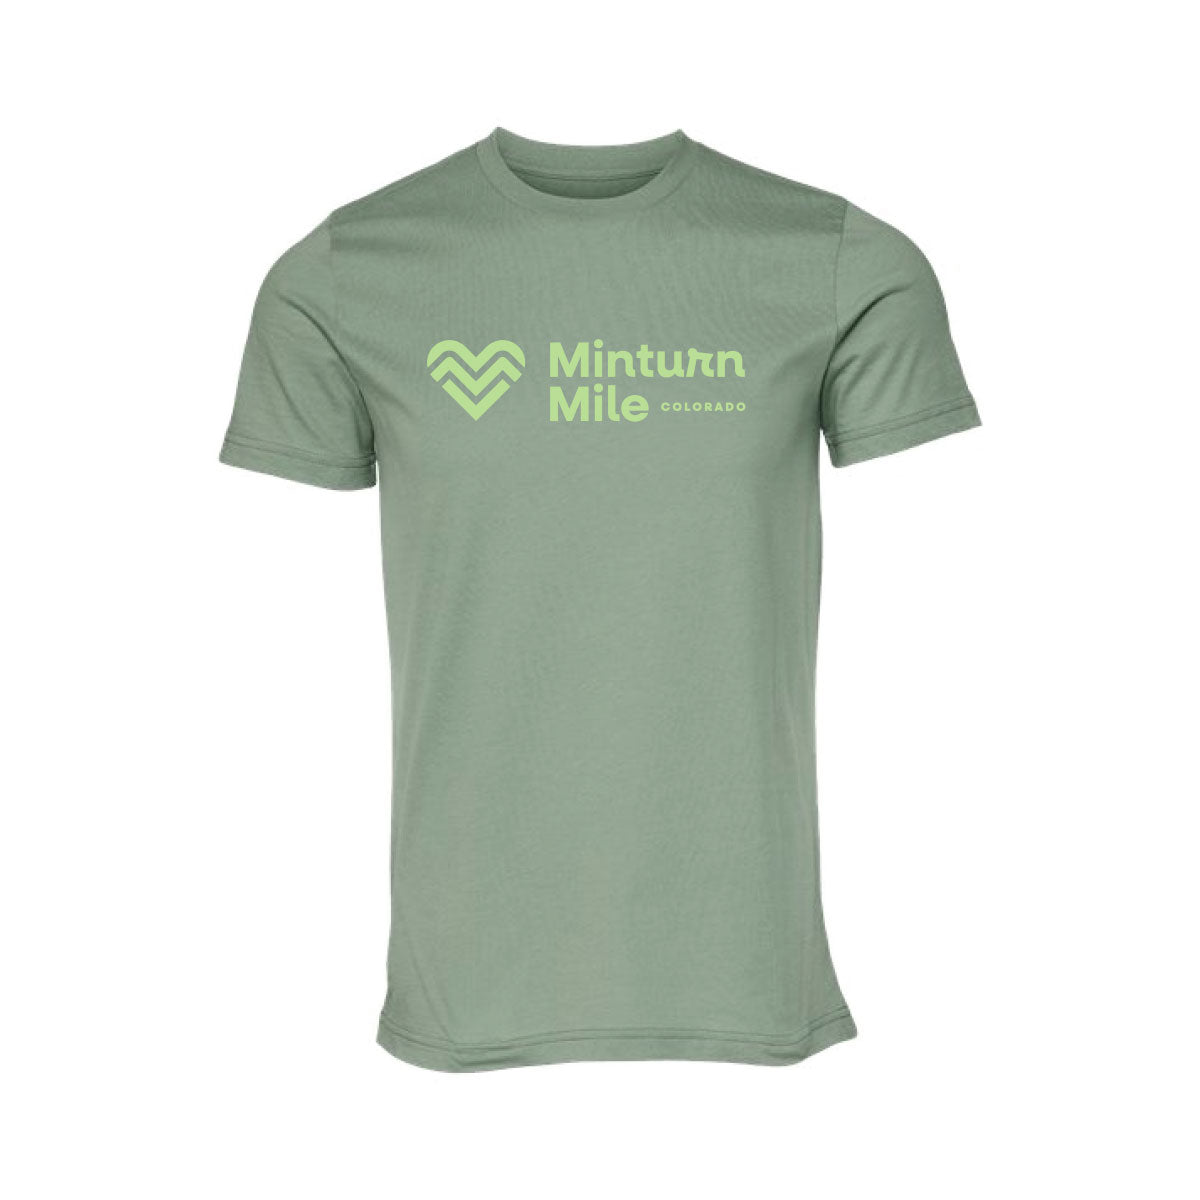 Minturn Mile T-shirt